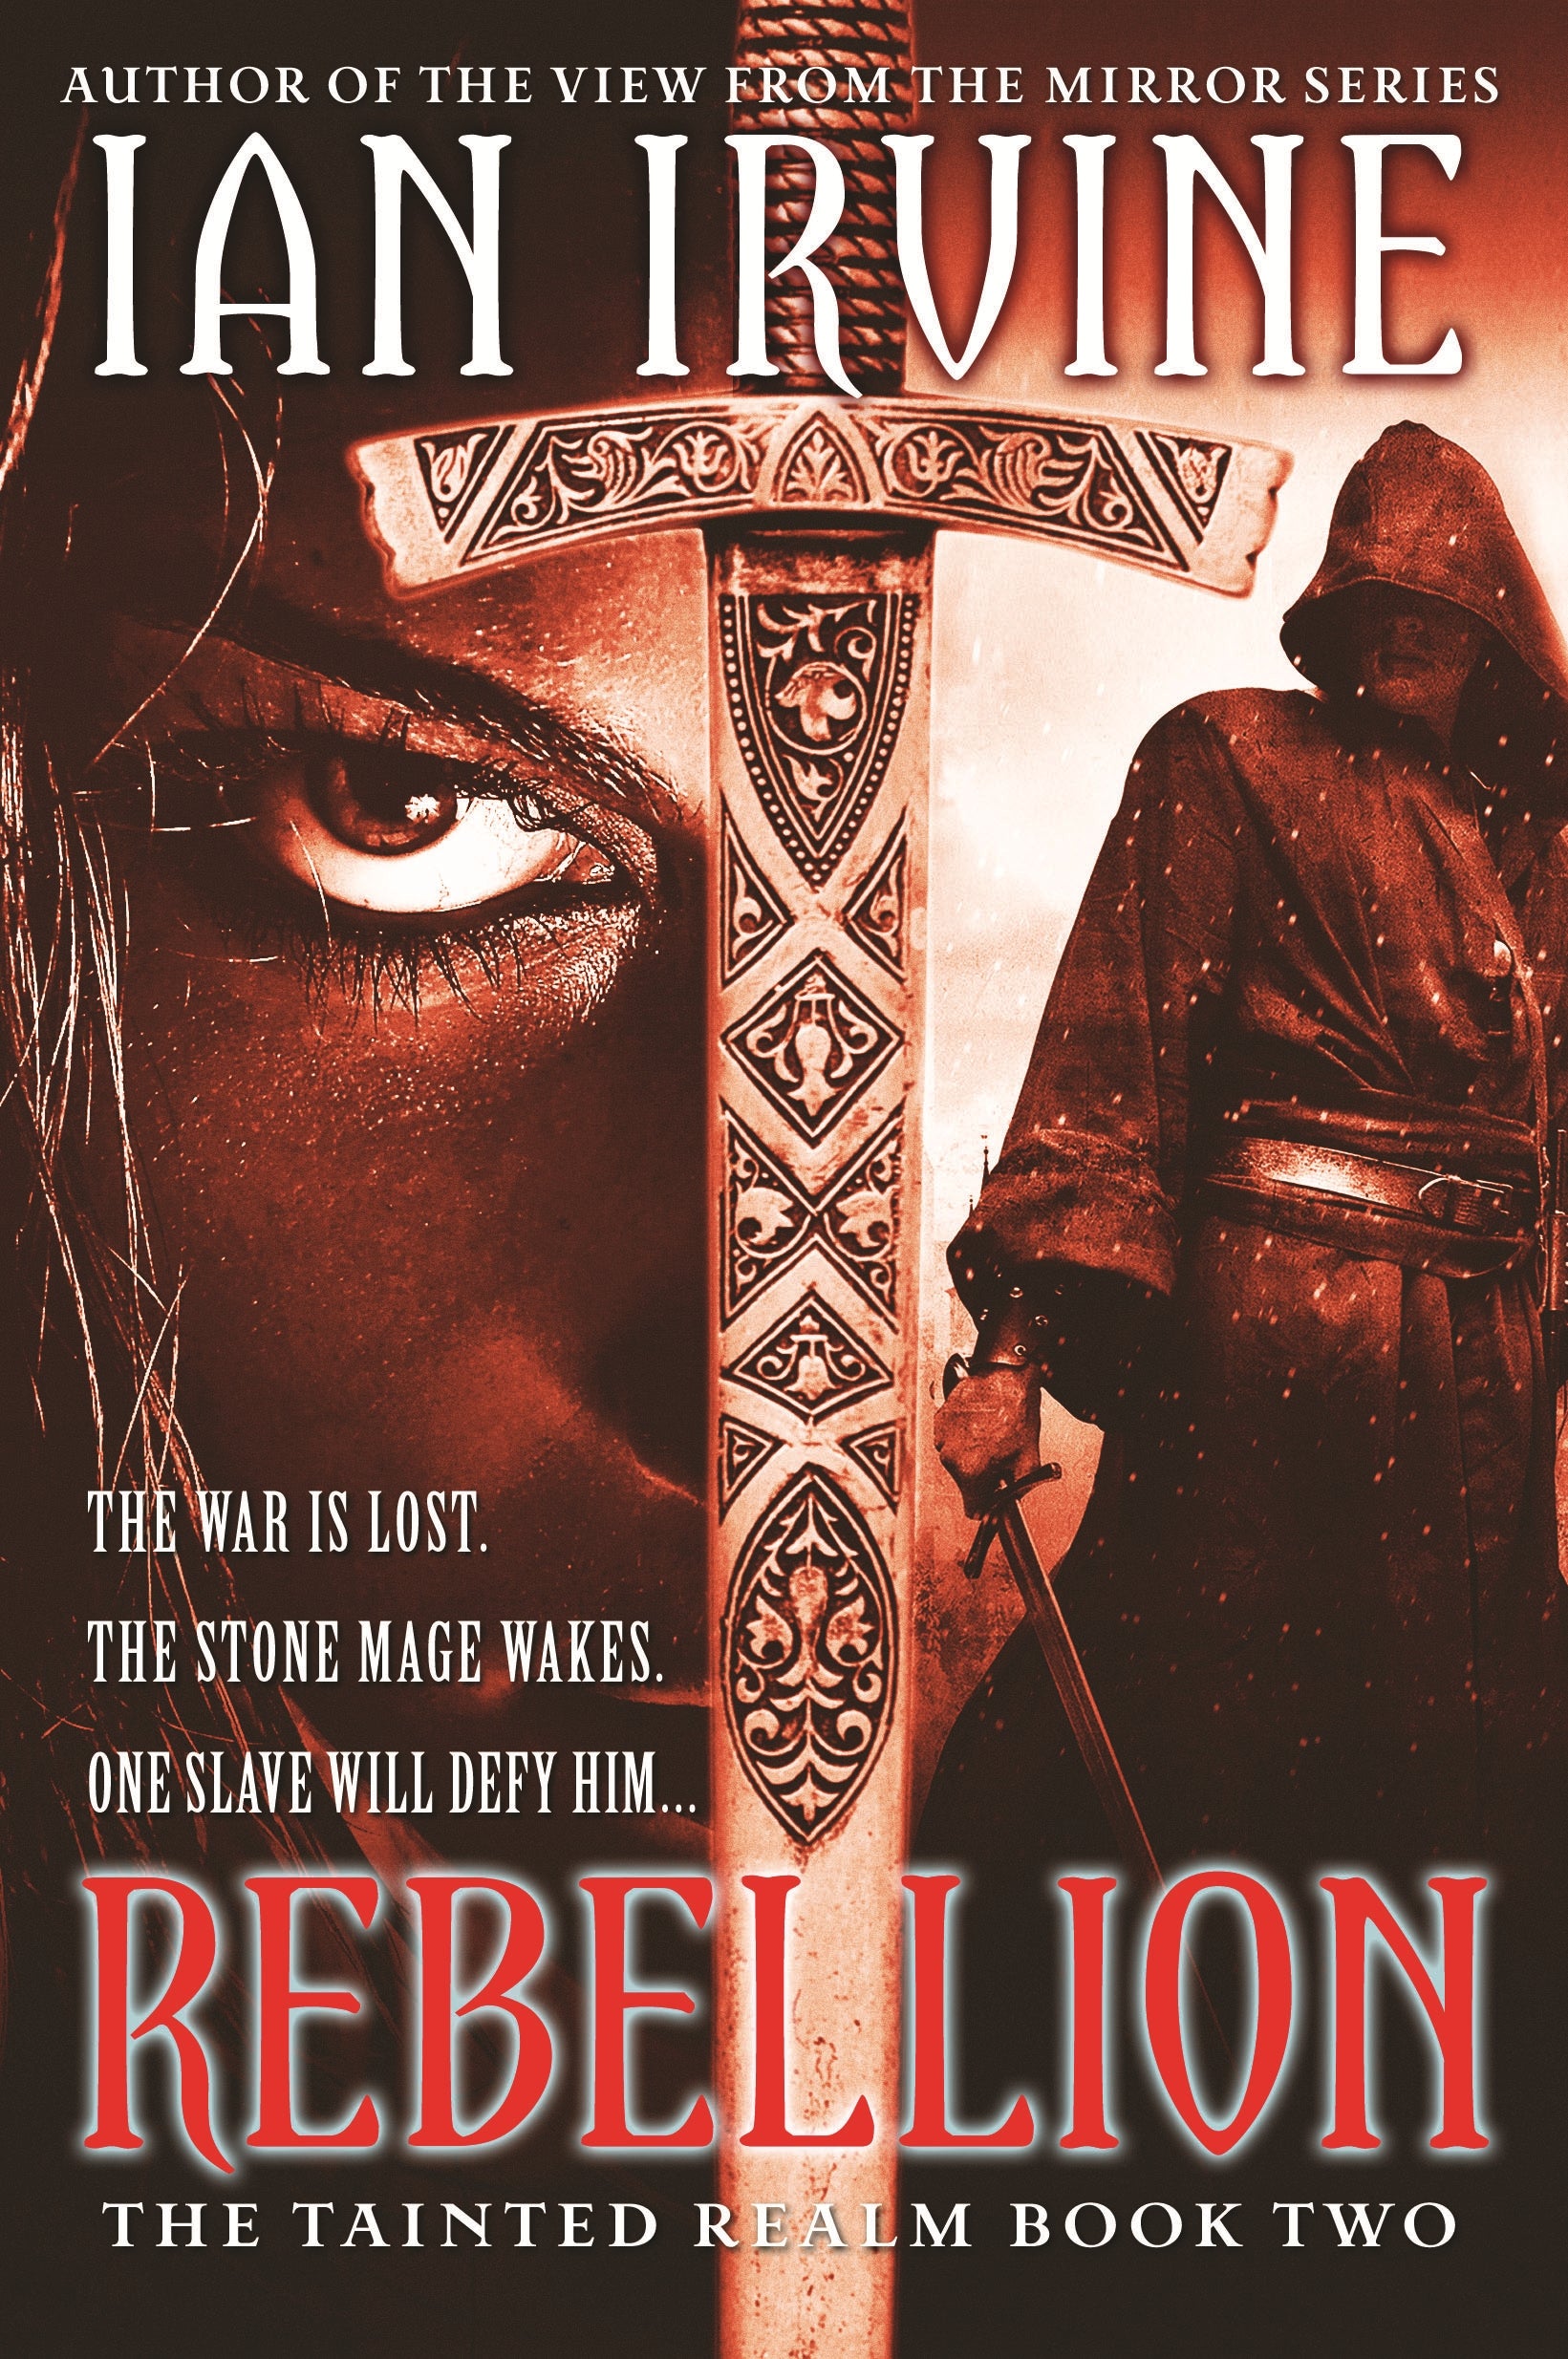 Rebellion by Ian Irvine